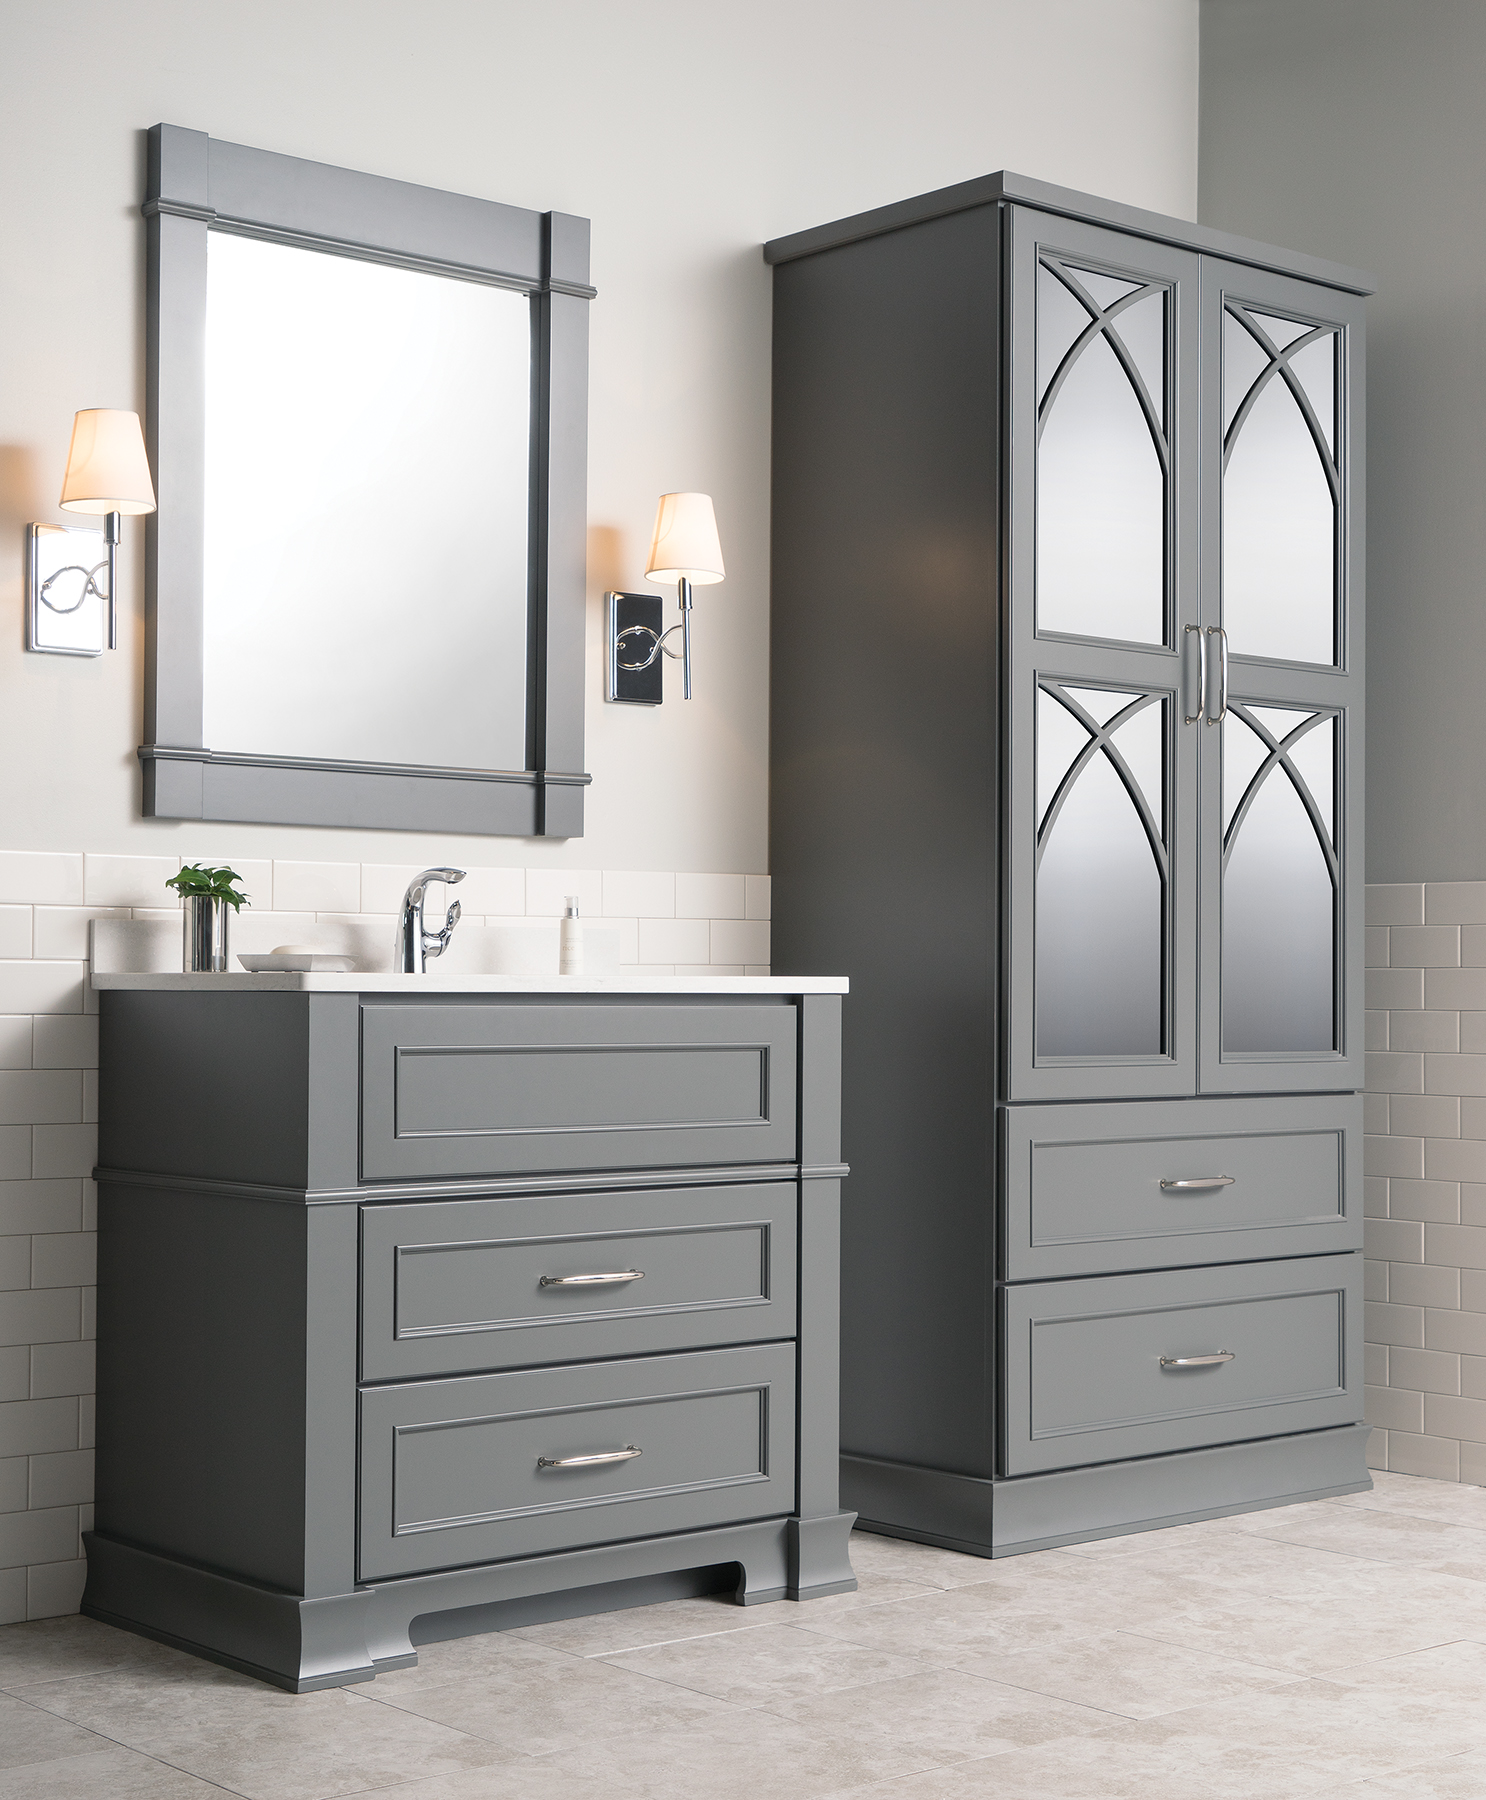 Vanity Grooming Cabinet - Dura Supreme Cabinetry